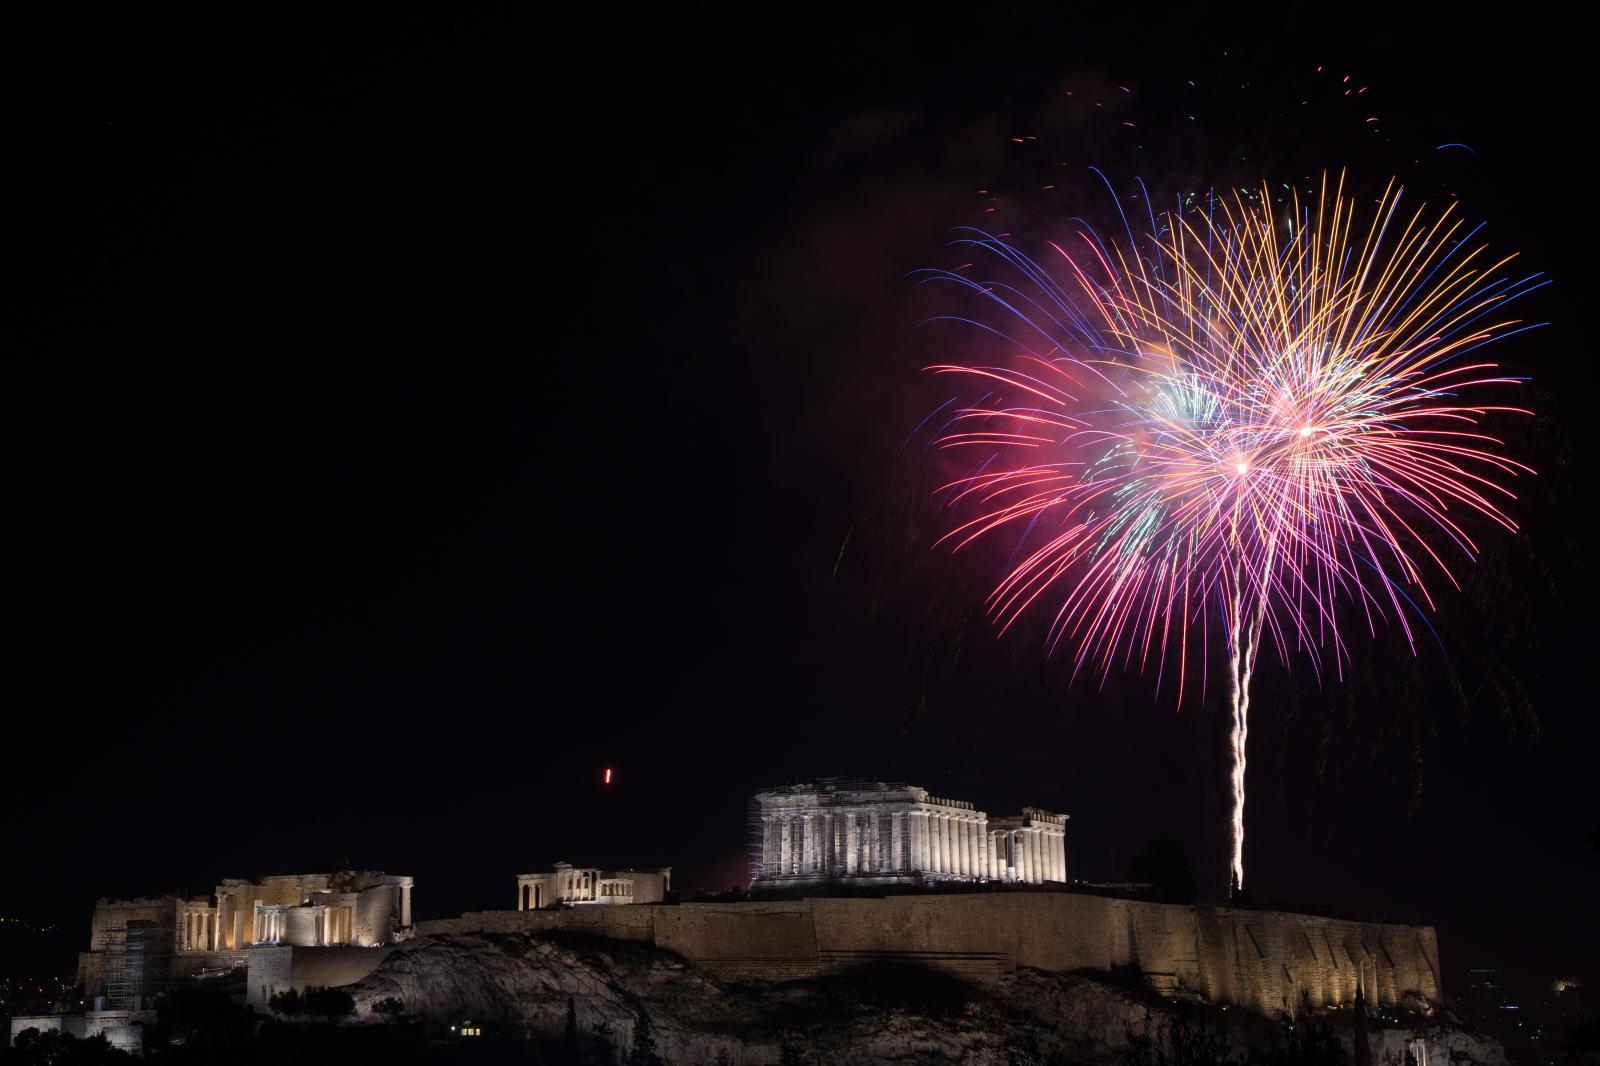 Fireworks go up next to the Parthenon on Acropolis Hill. Athens, January 1, 2022.